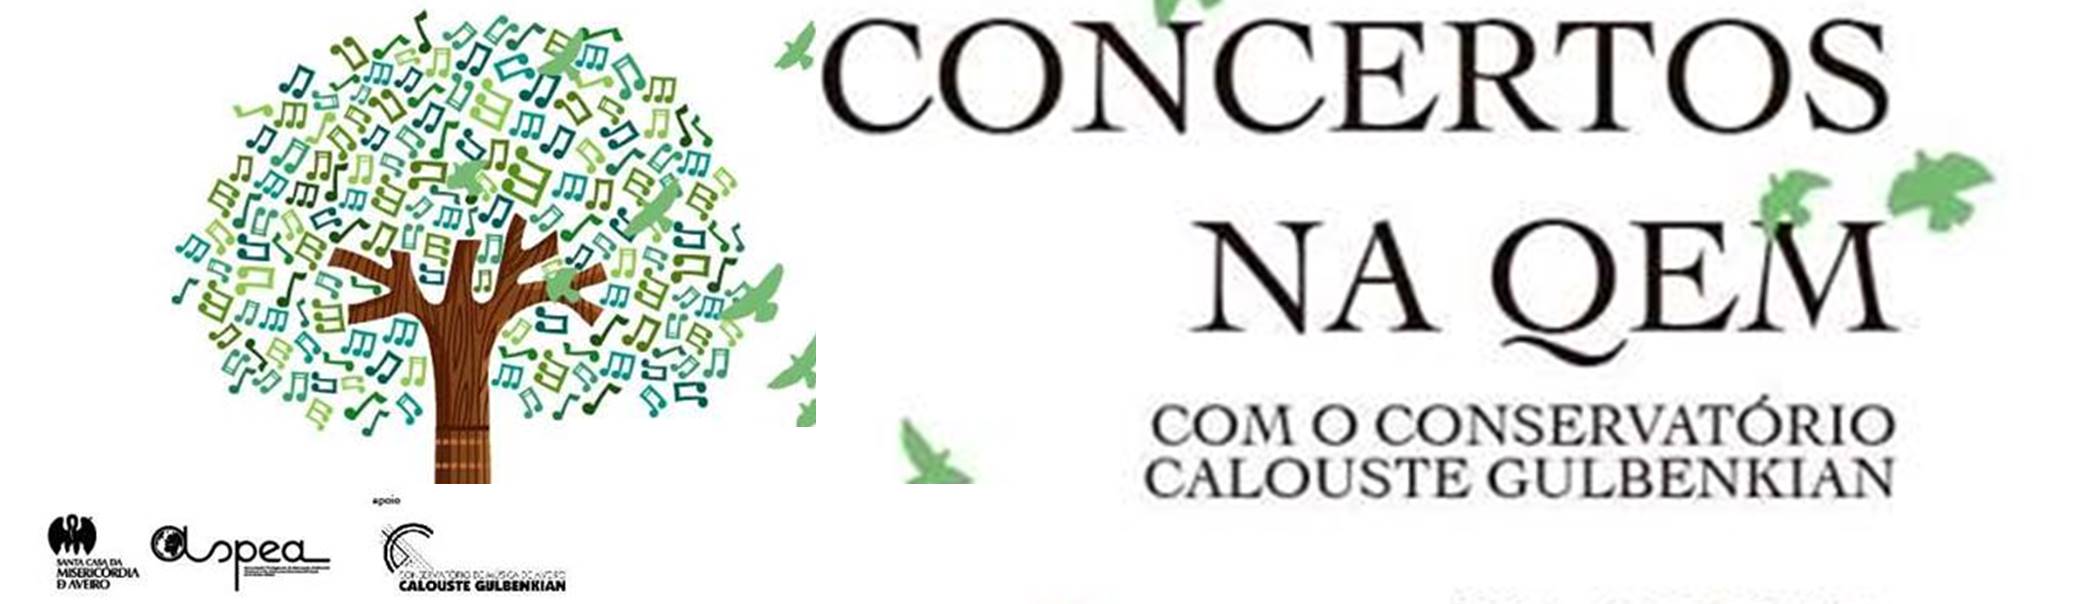 concertos banner